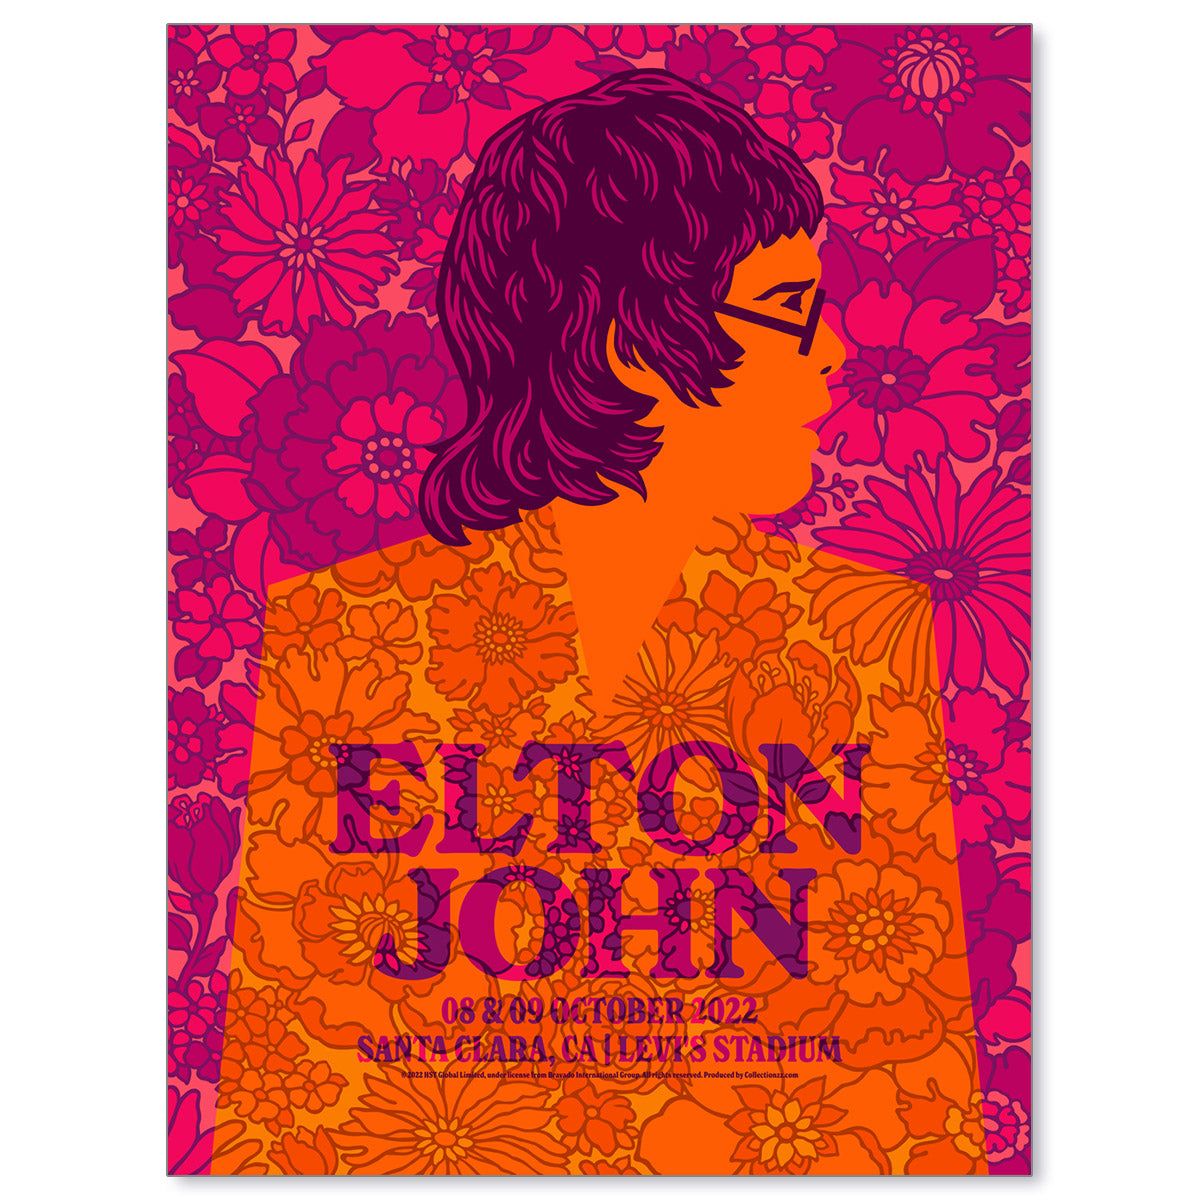 Elton John Santa Clara October 8 & 9, 2022 Farewell Yellow Brick Road Tour